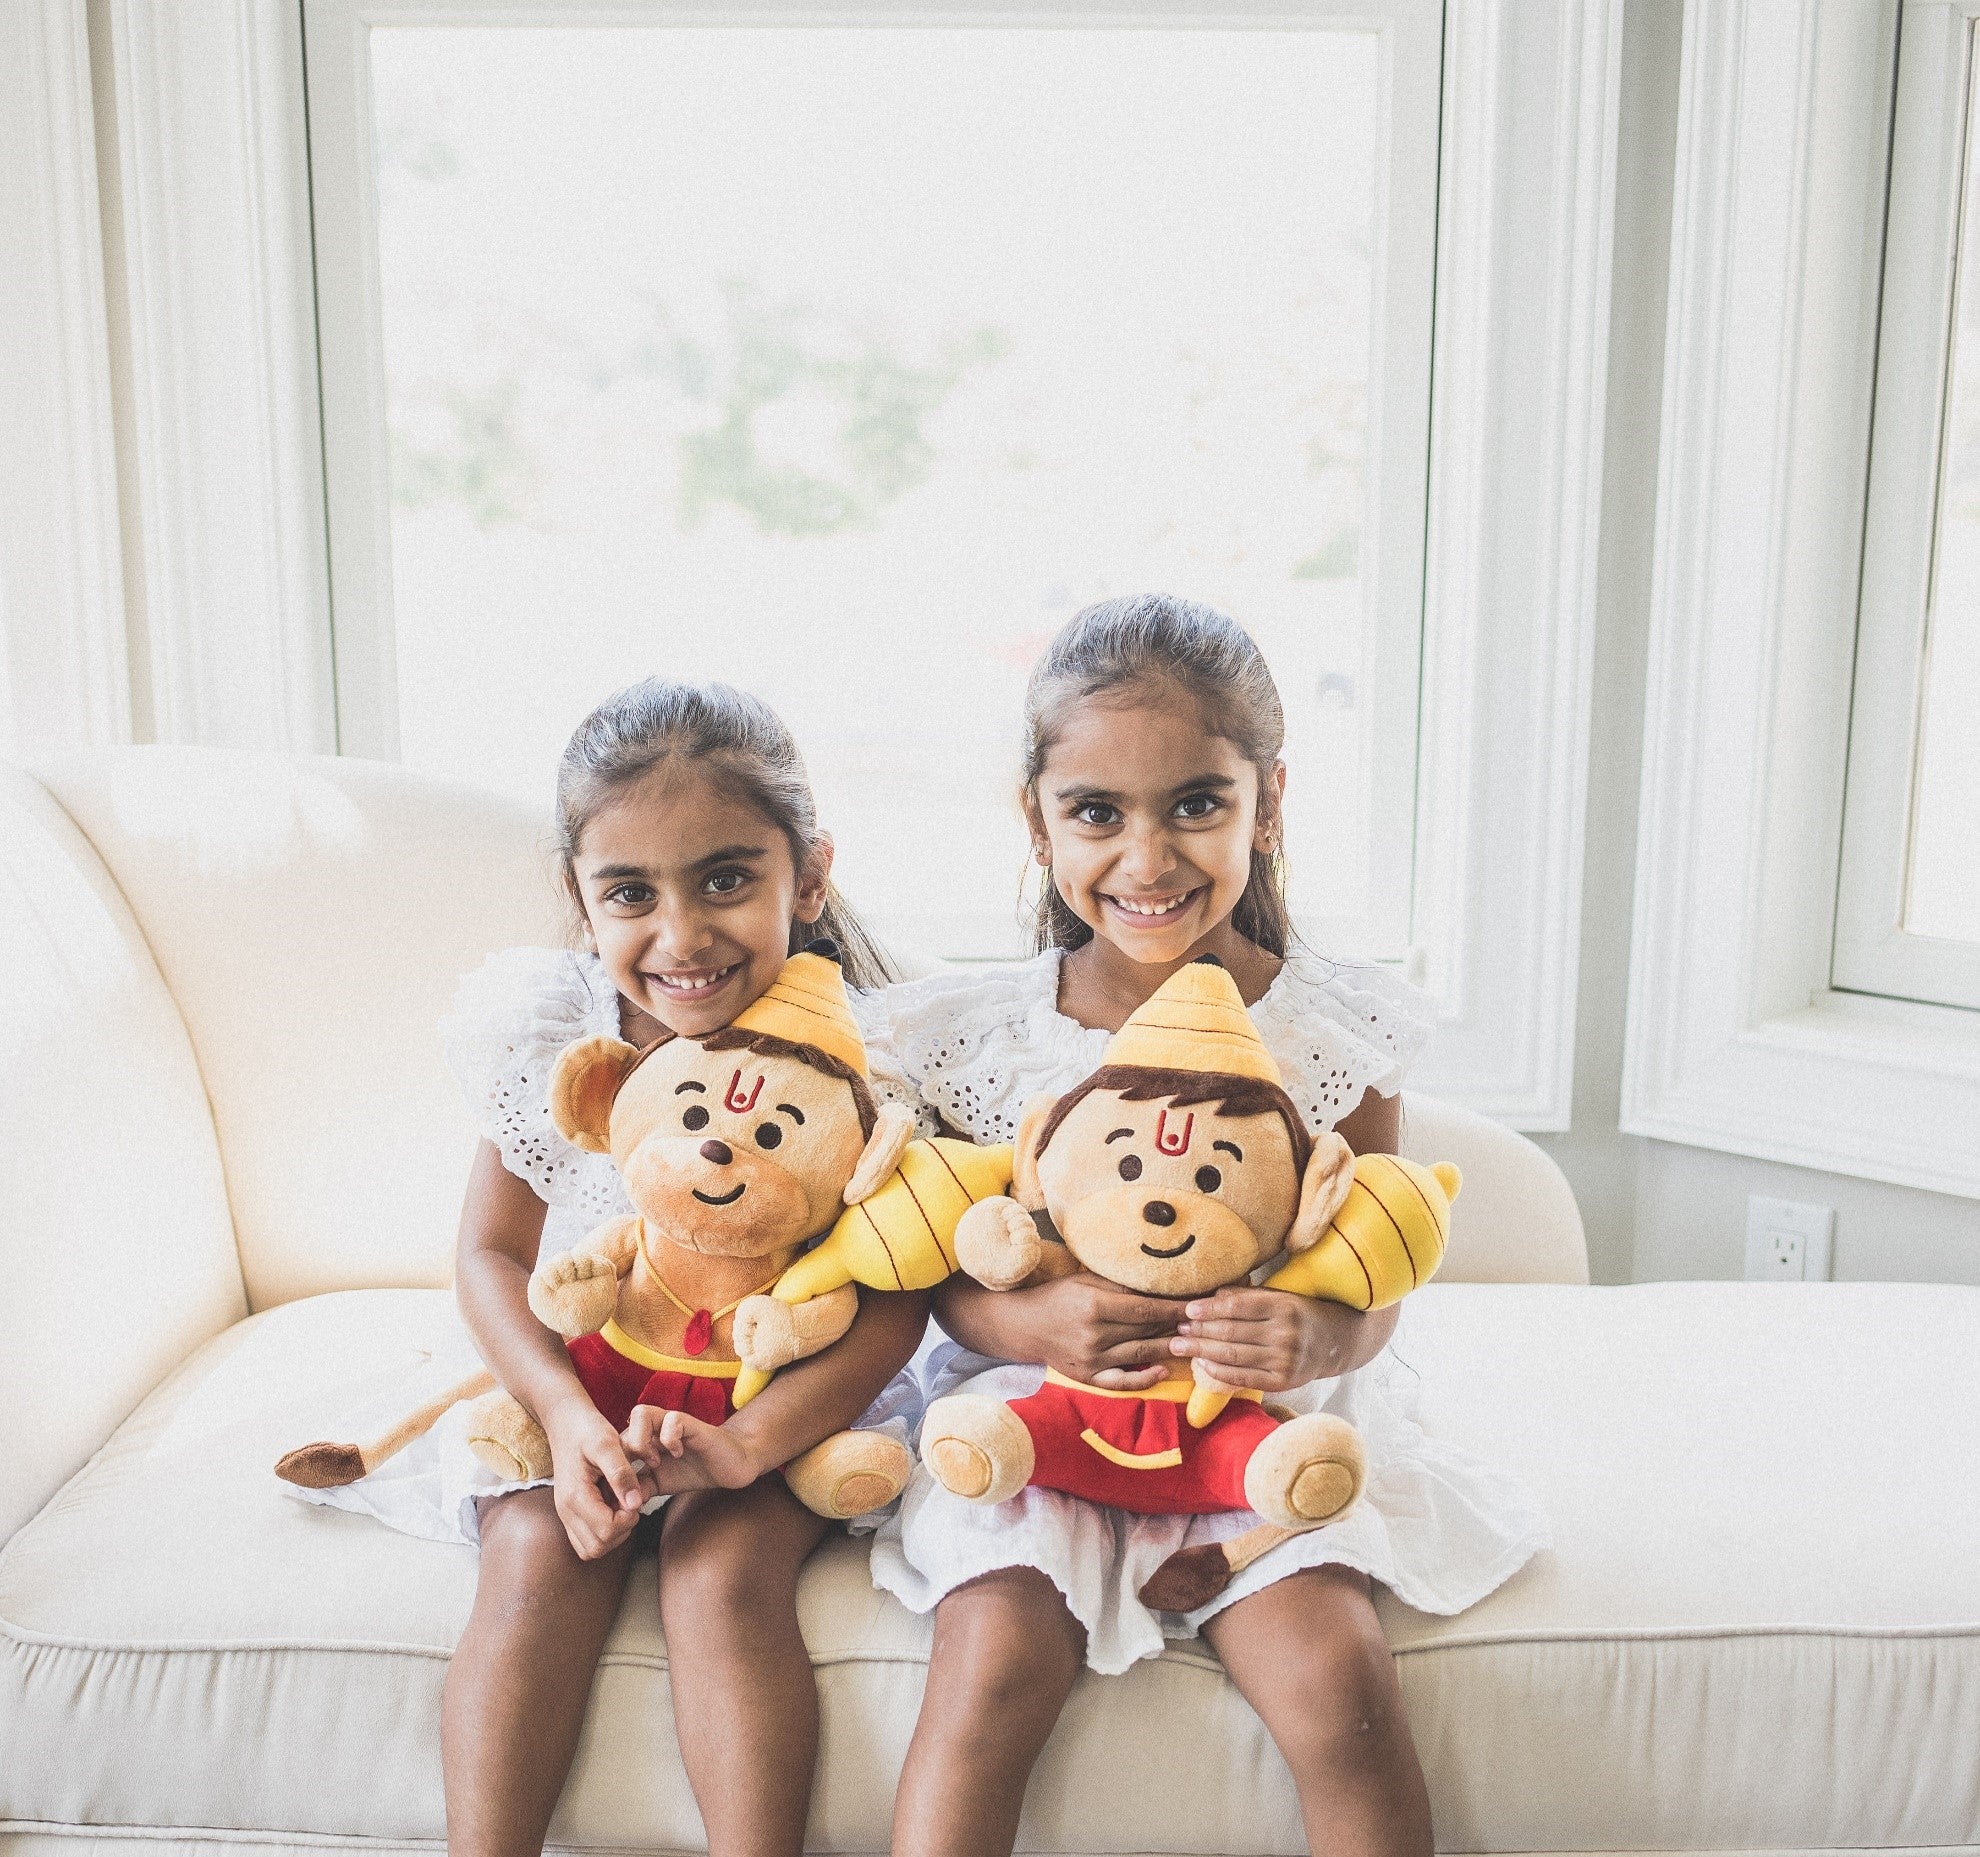 two smiling children holding baby hanuman plush toys